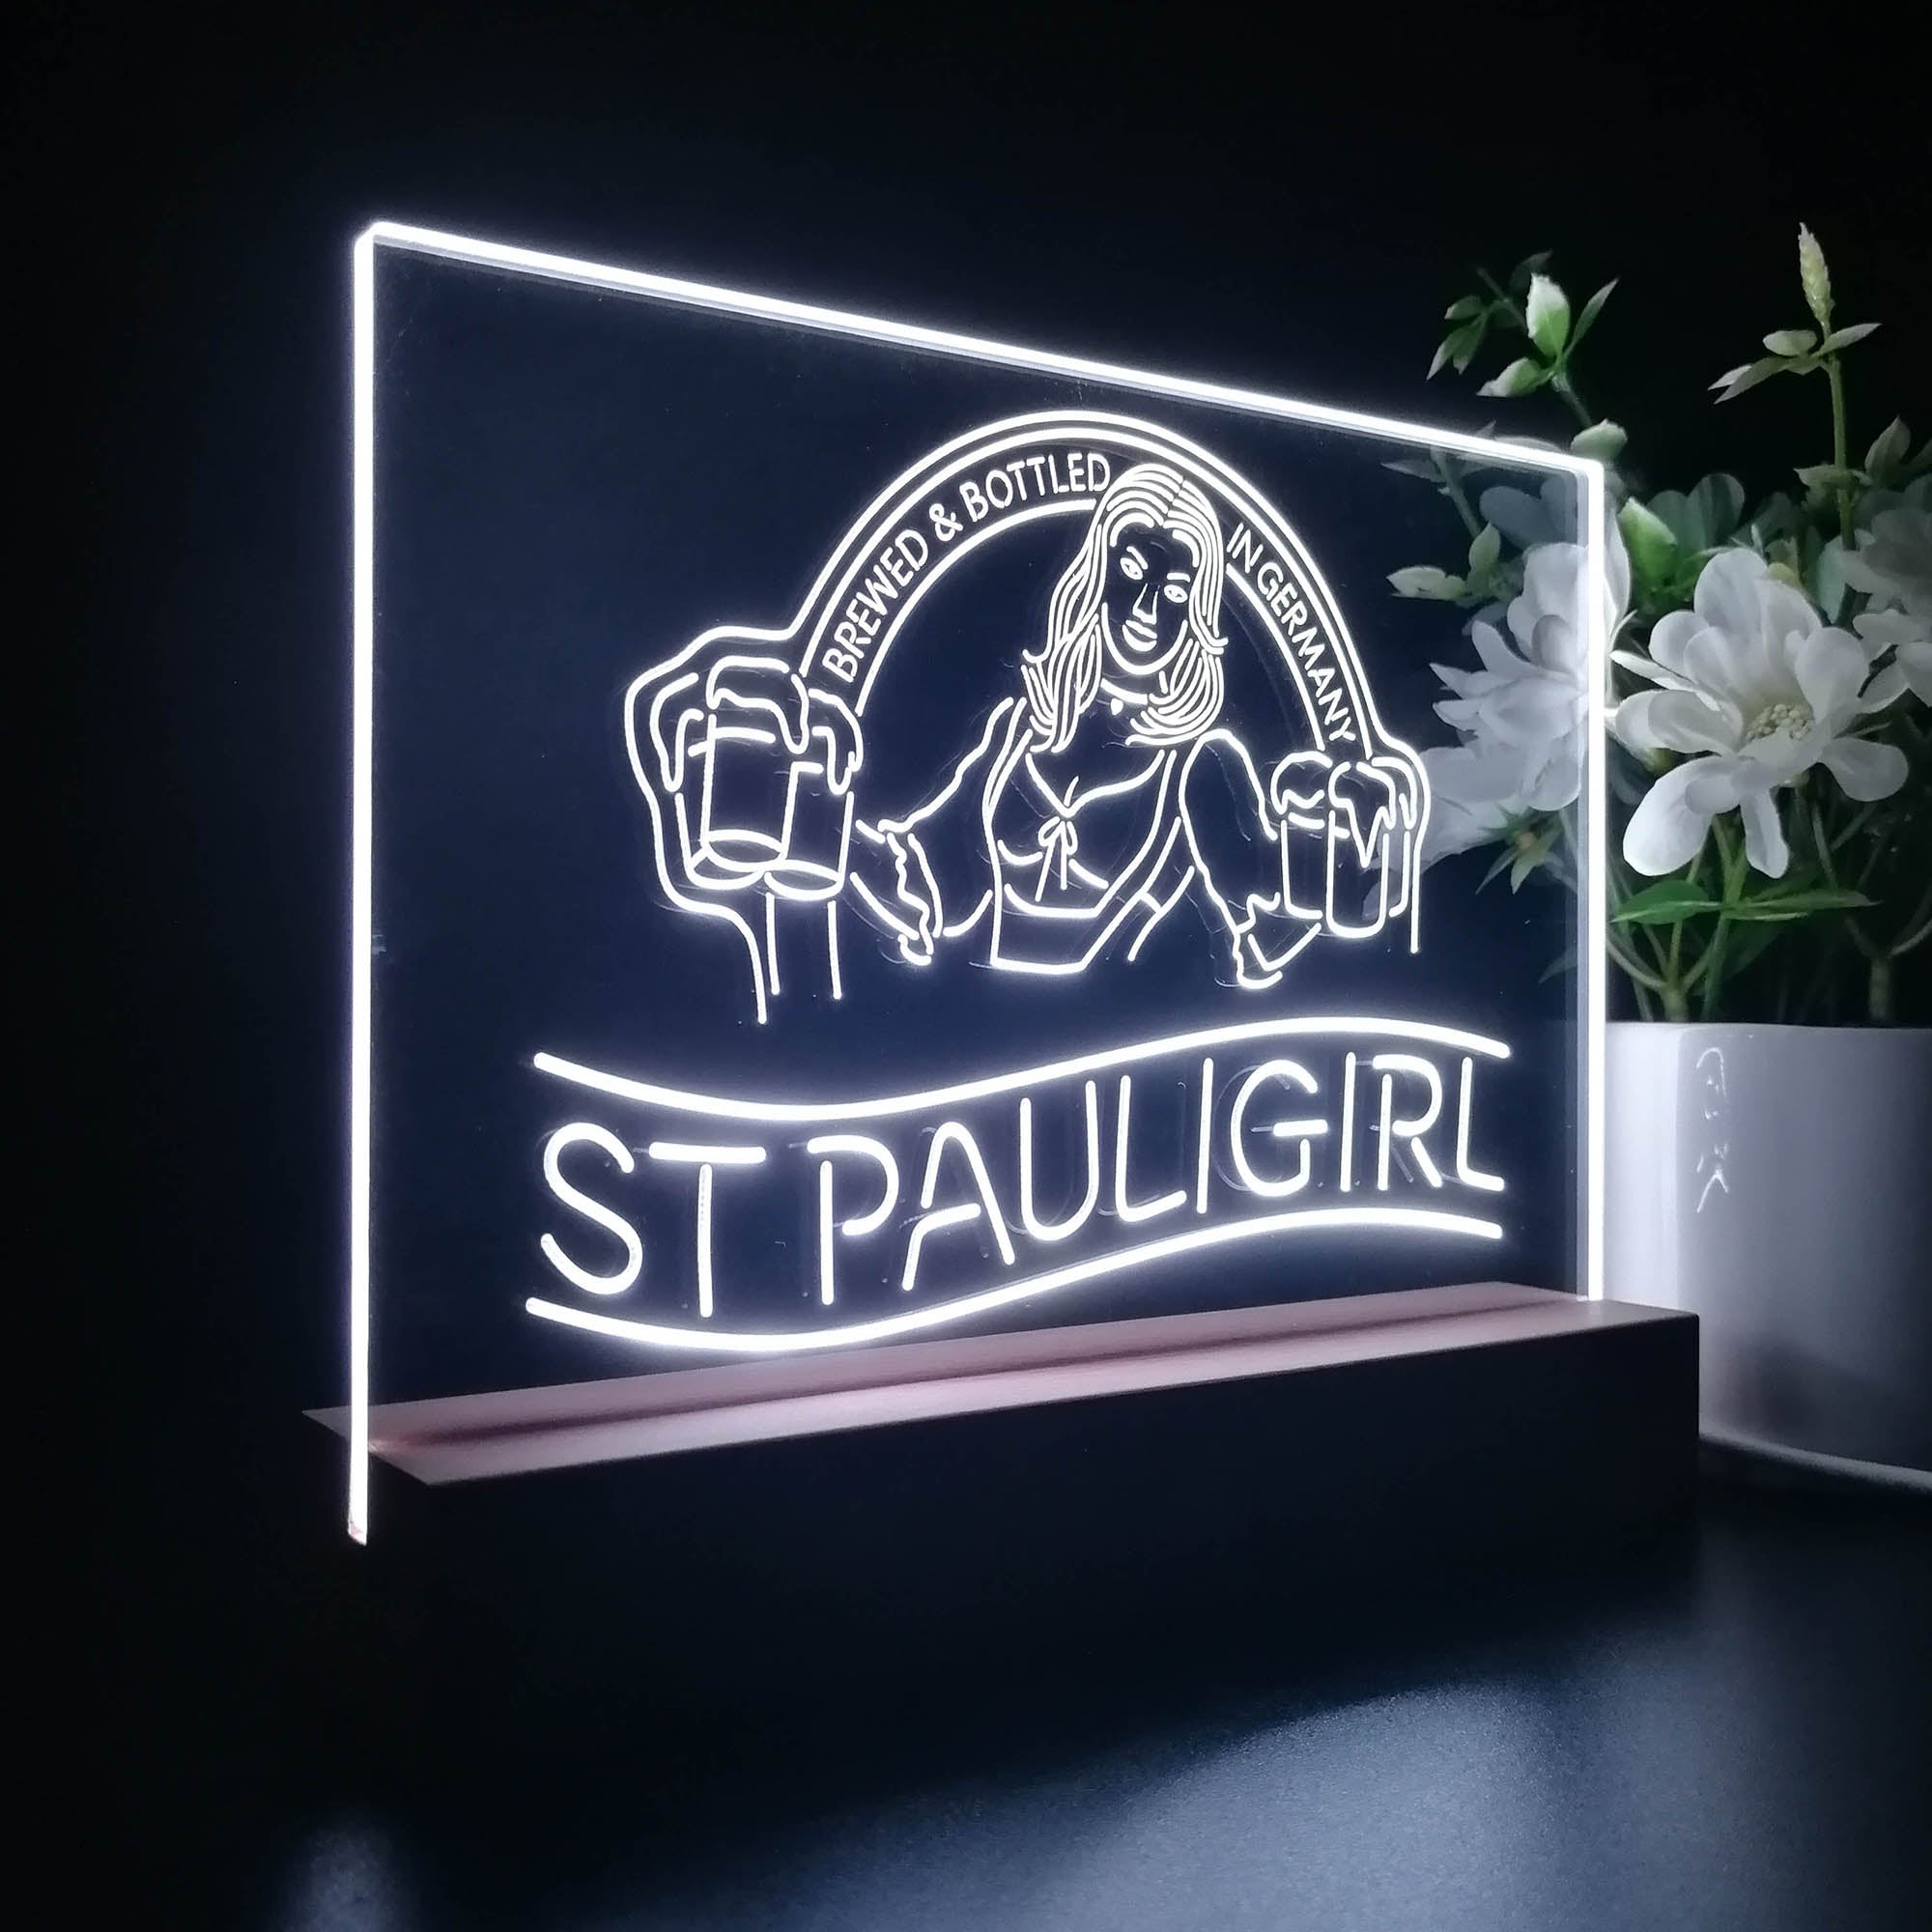 St. Paul Girl Man Cave Neon Sign Pub Bar Lamp